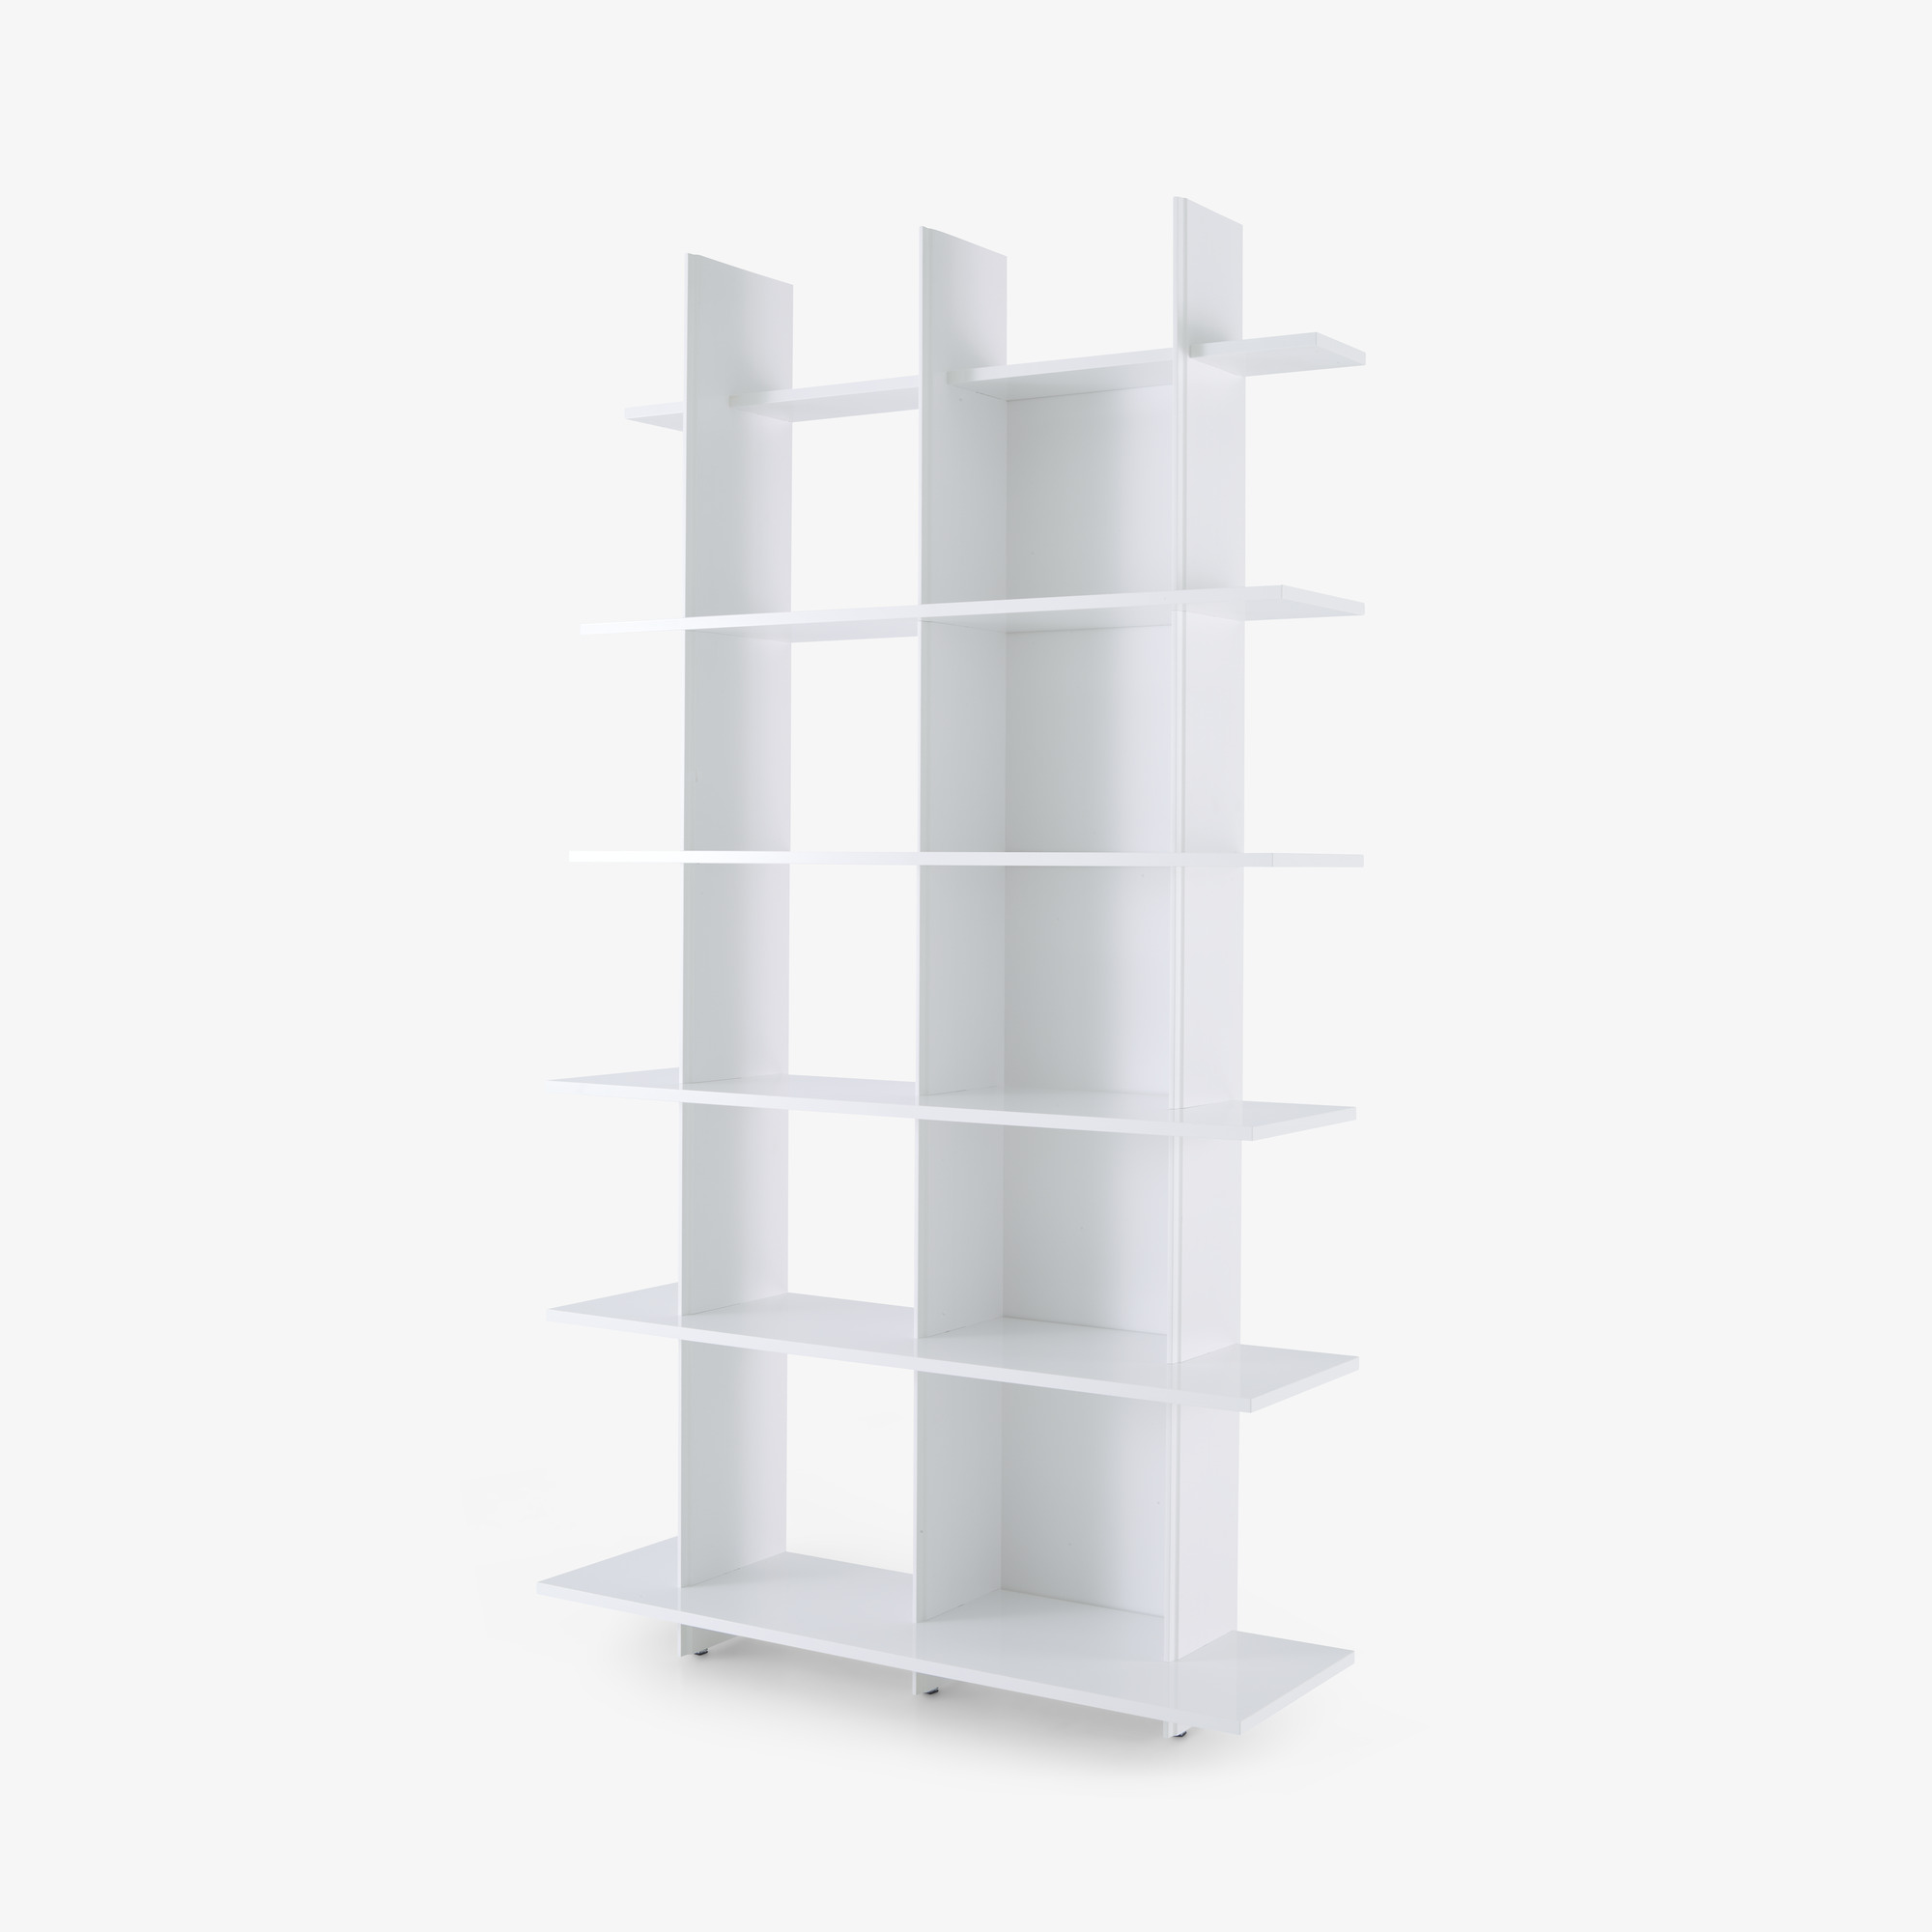 Image Single shelving unit white lacquer  3